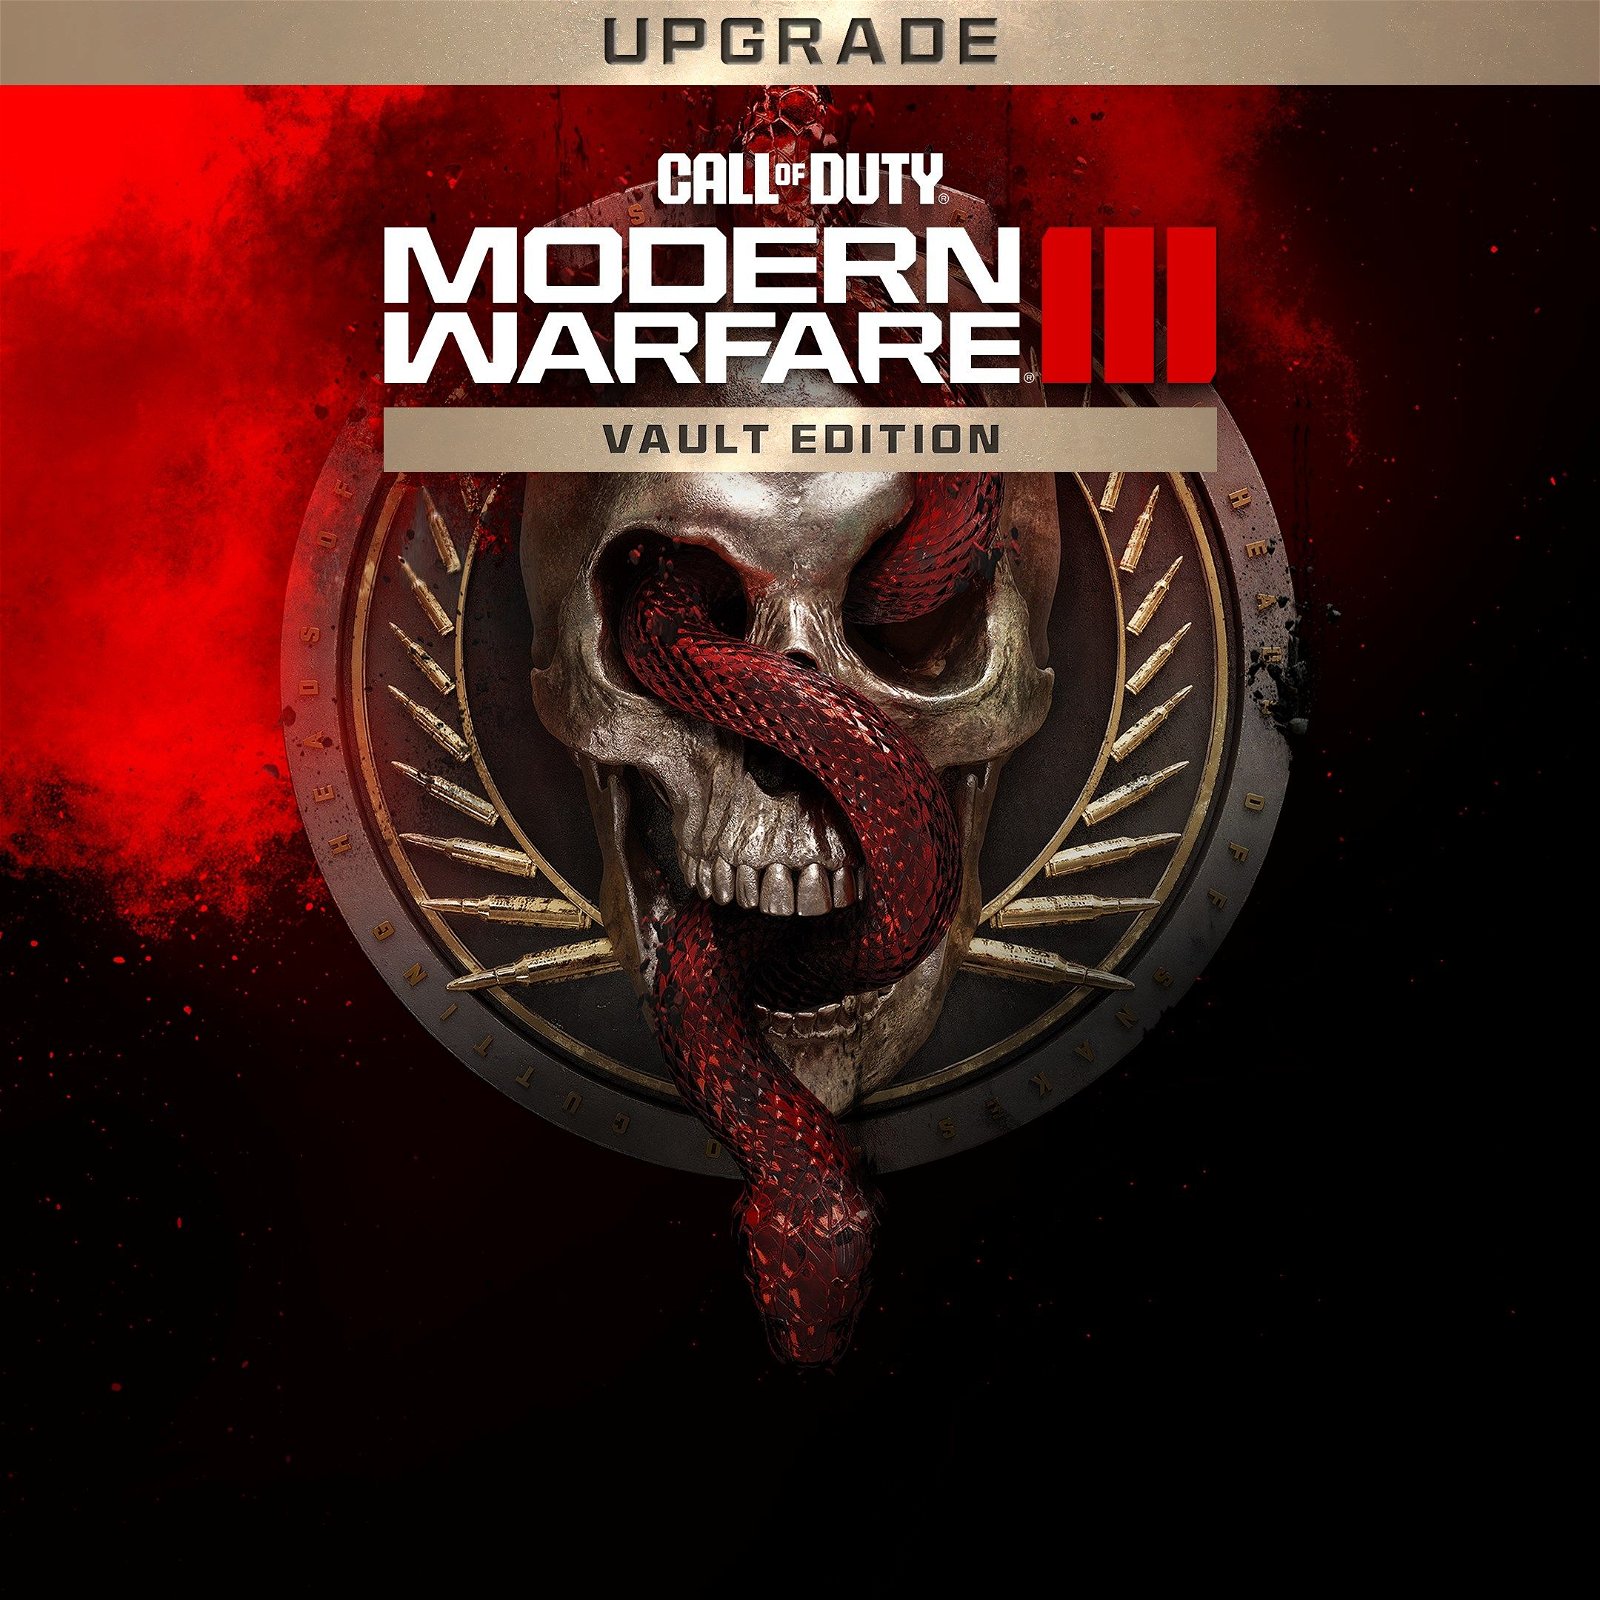 Image of Call of Duty: Modern Warfare III - Vault Edition Upgrade